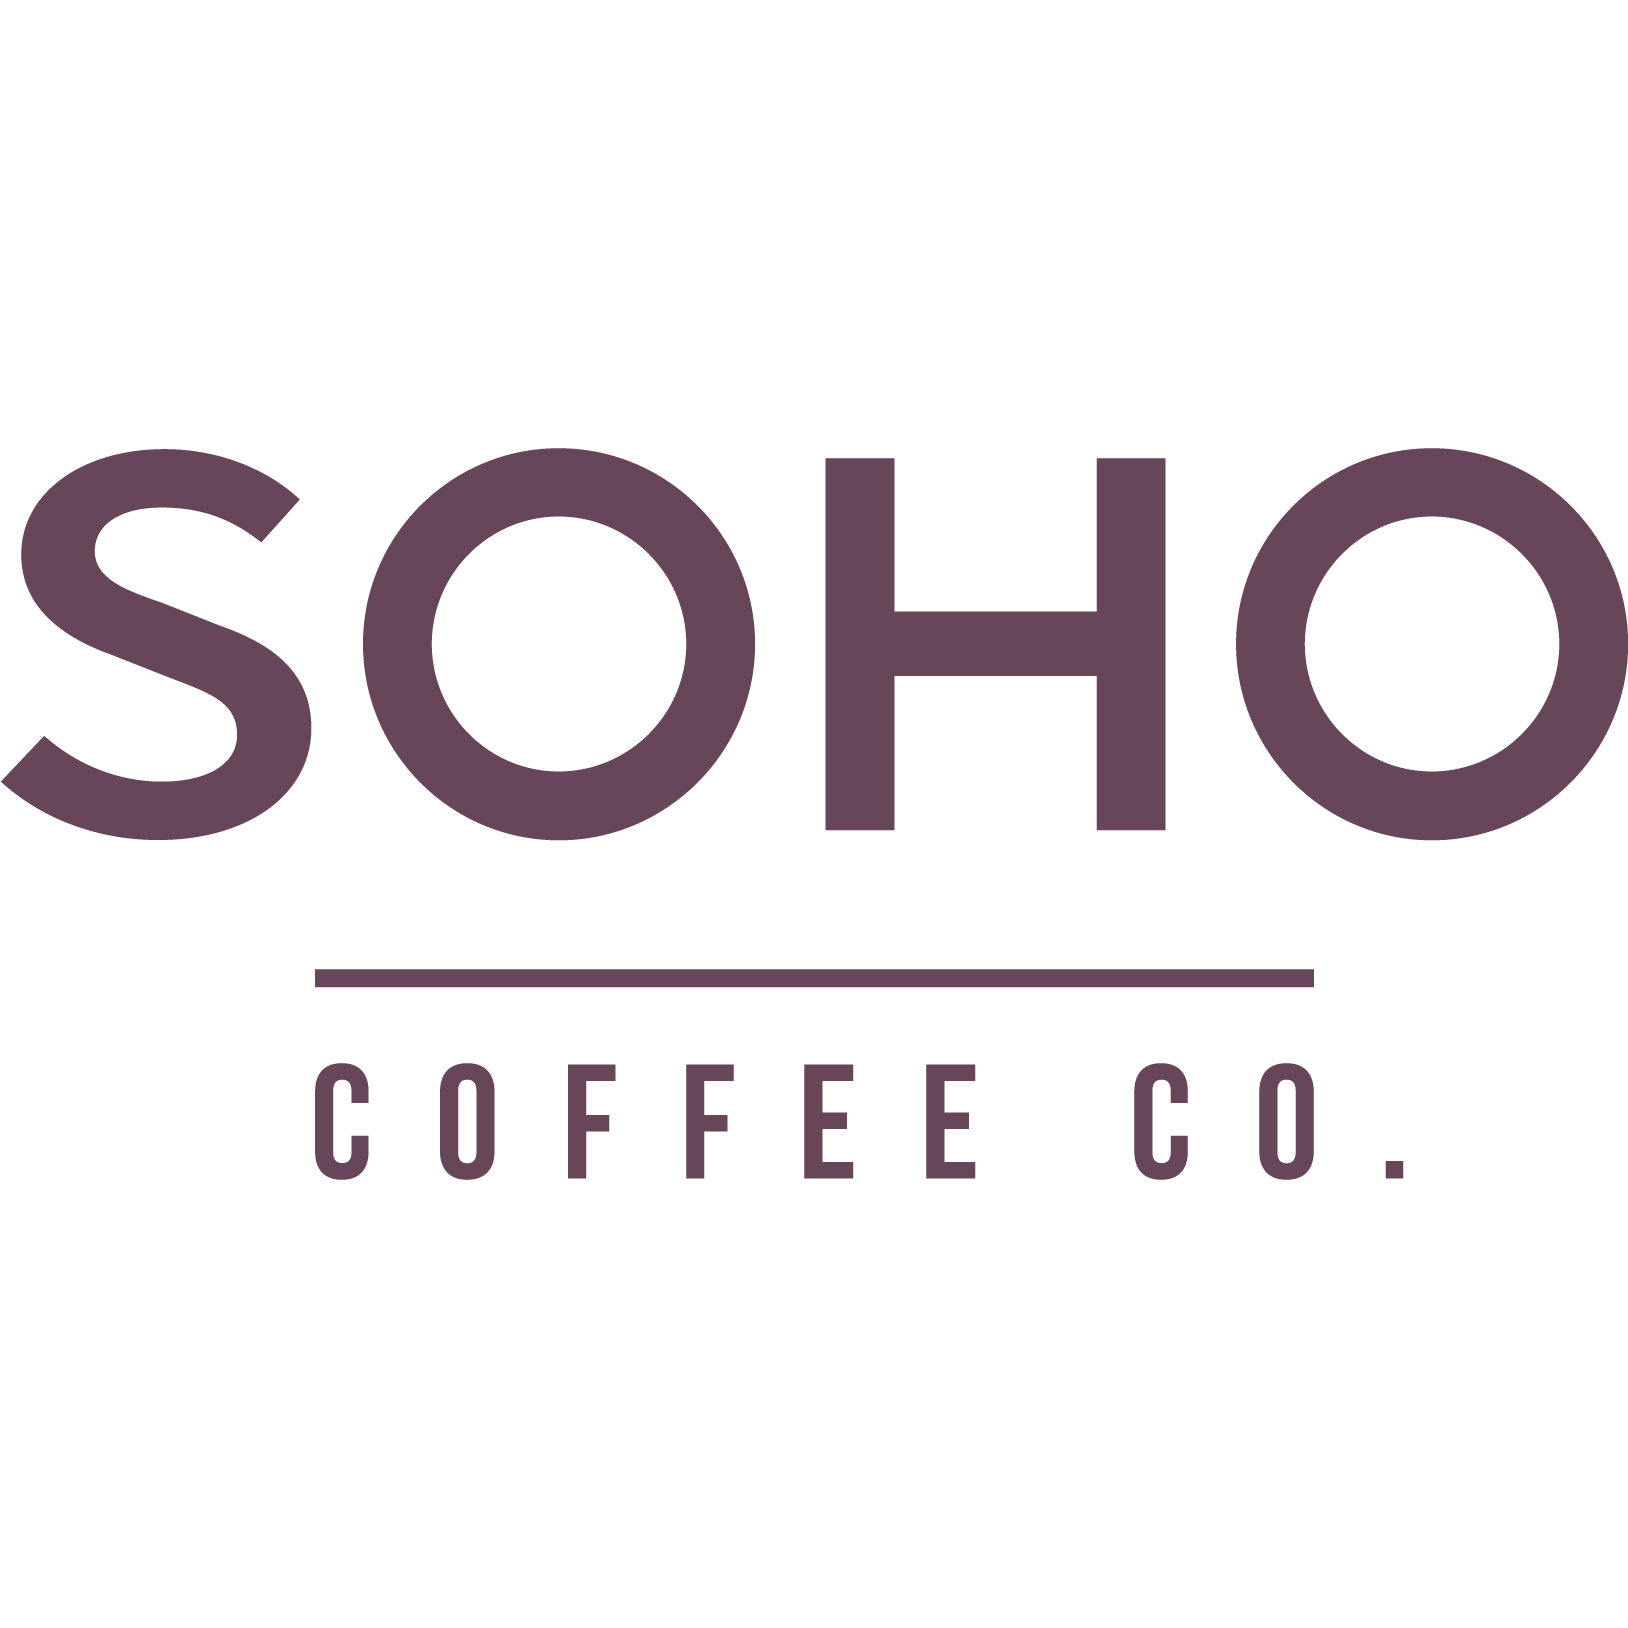 SOHO Coffee Co. - Brierley Hill, West Midlands DY5 1QX - 01384 880584 | ShowMeLocal.com